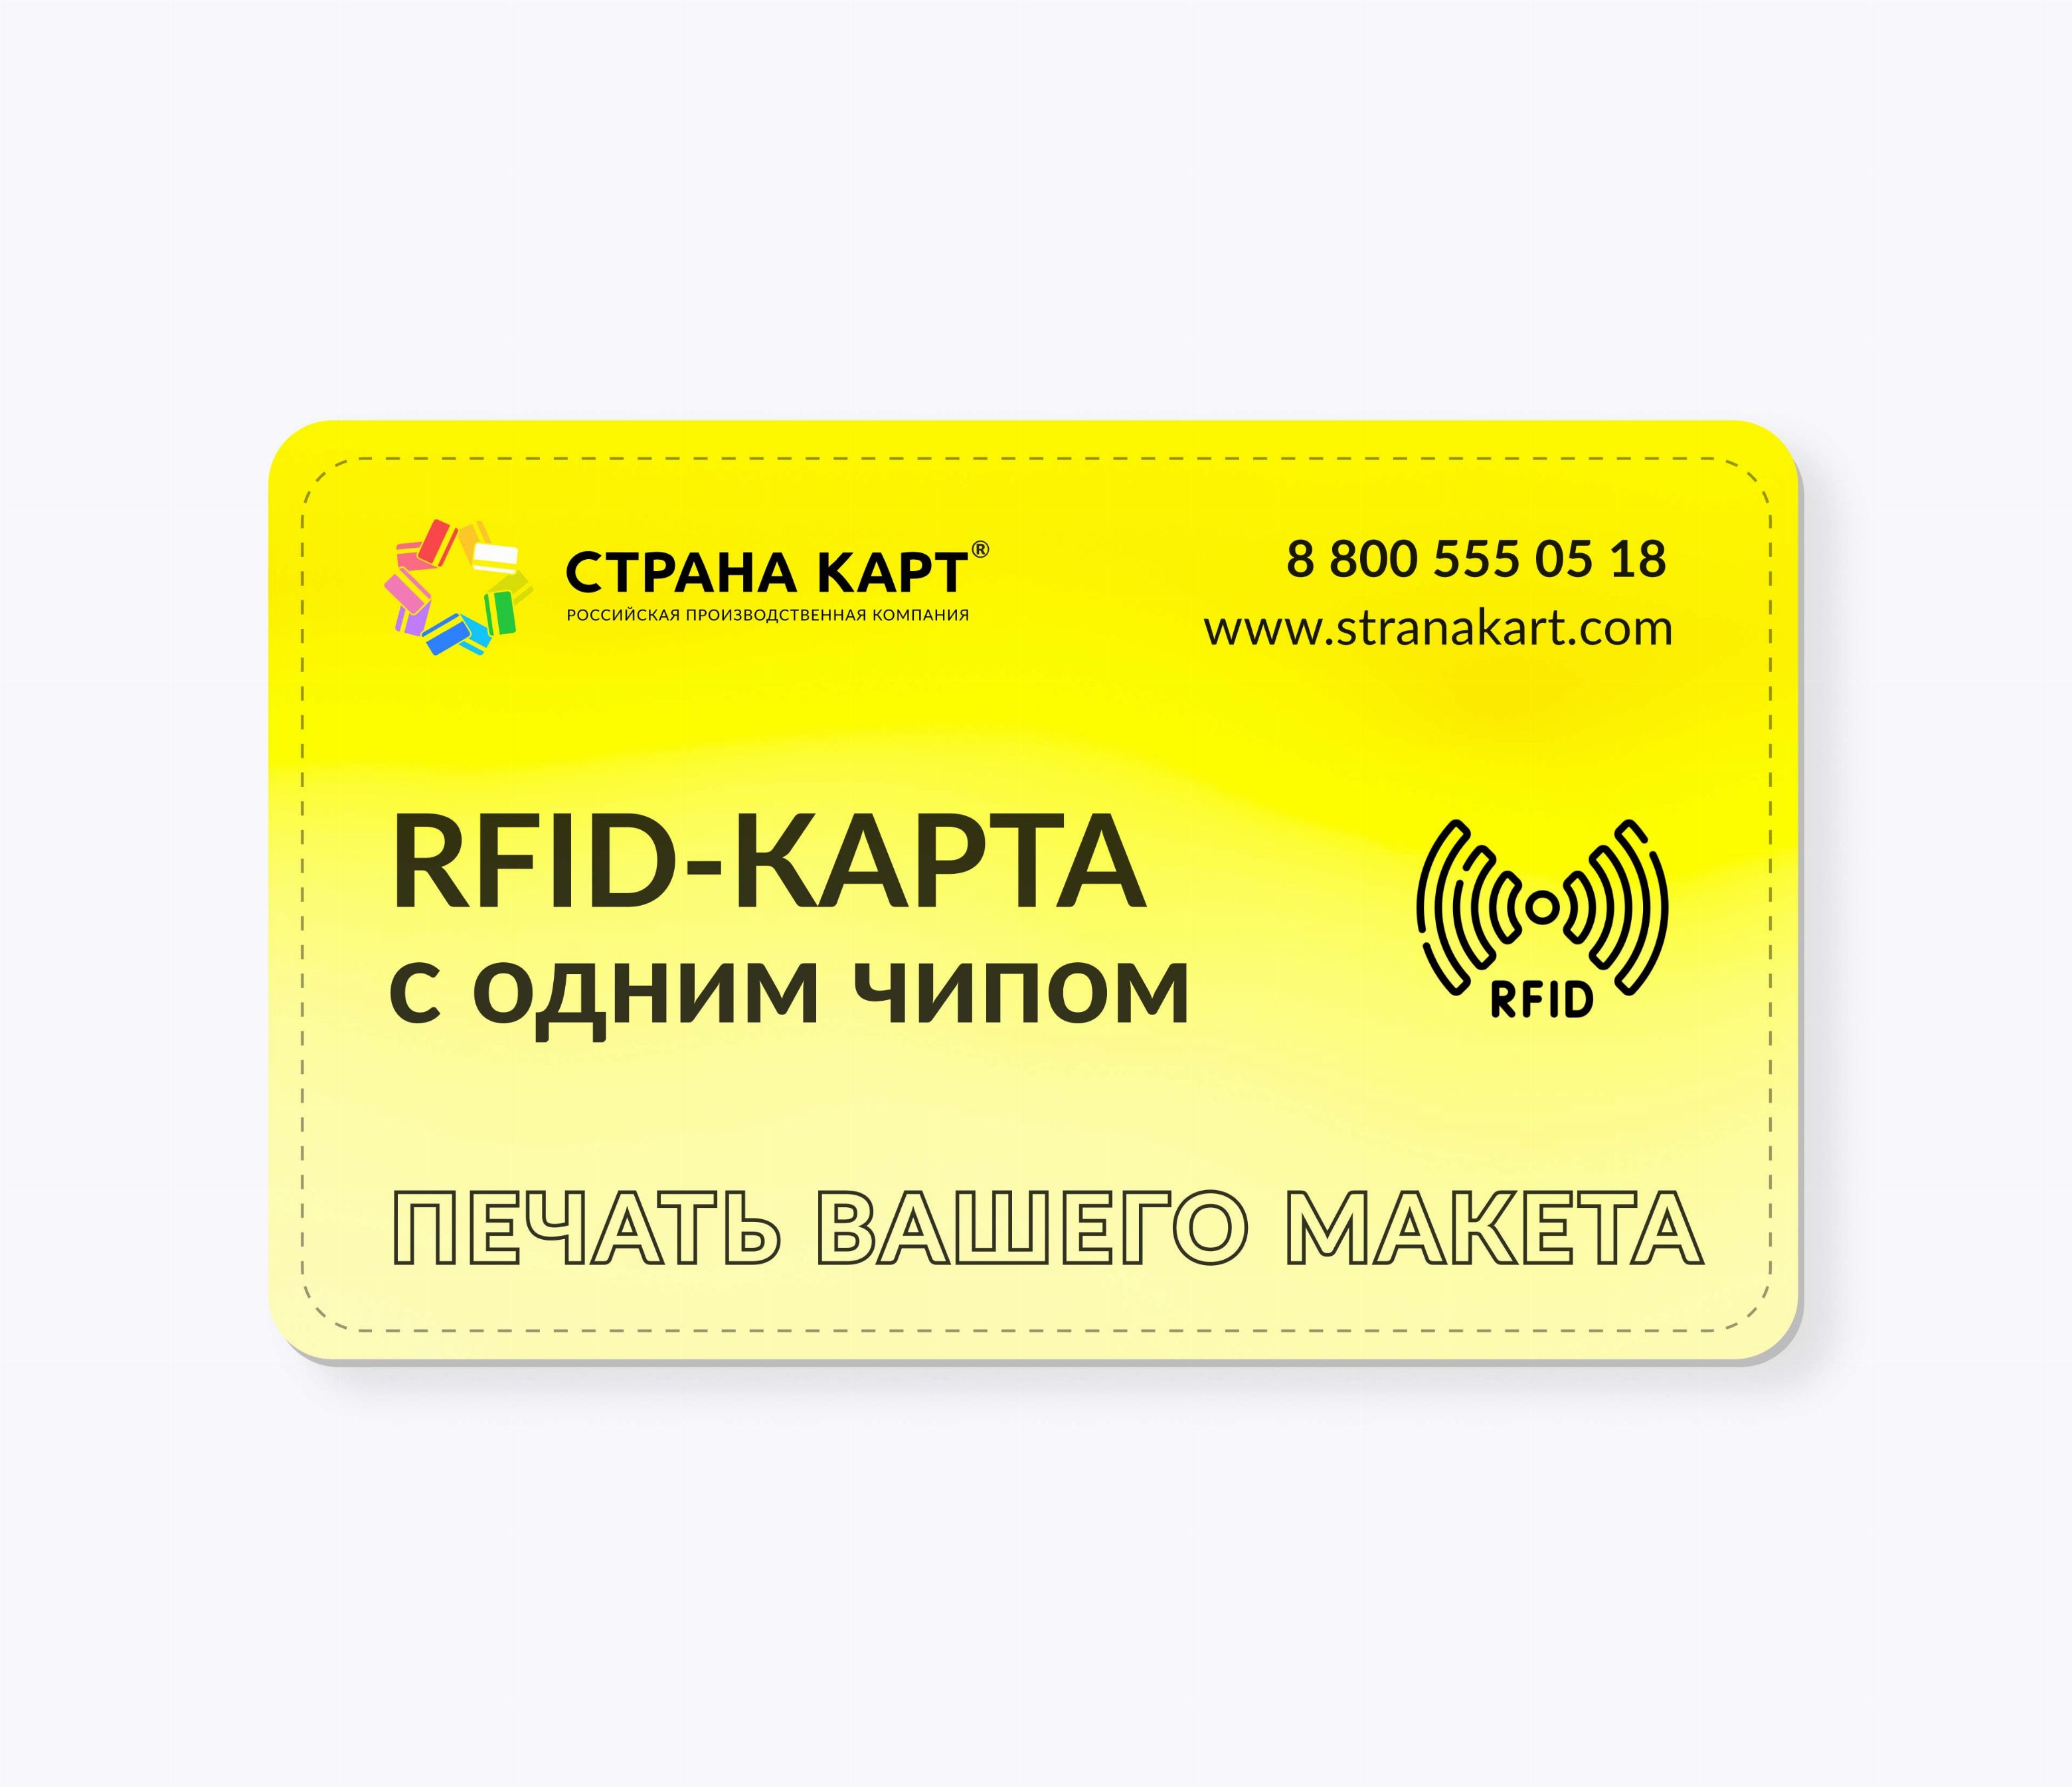 RFID-карты с чипом NXP MIFARE Classic EV1 1k 4 byte nUID печать вашего макета RFID-карты с чипом NXP MIFARE Classic EV1 1k 4 byte nUID